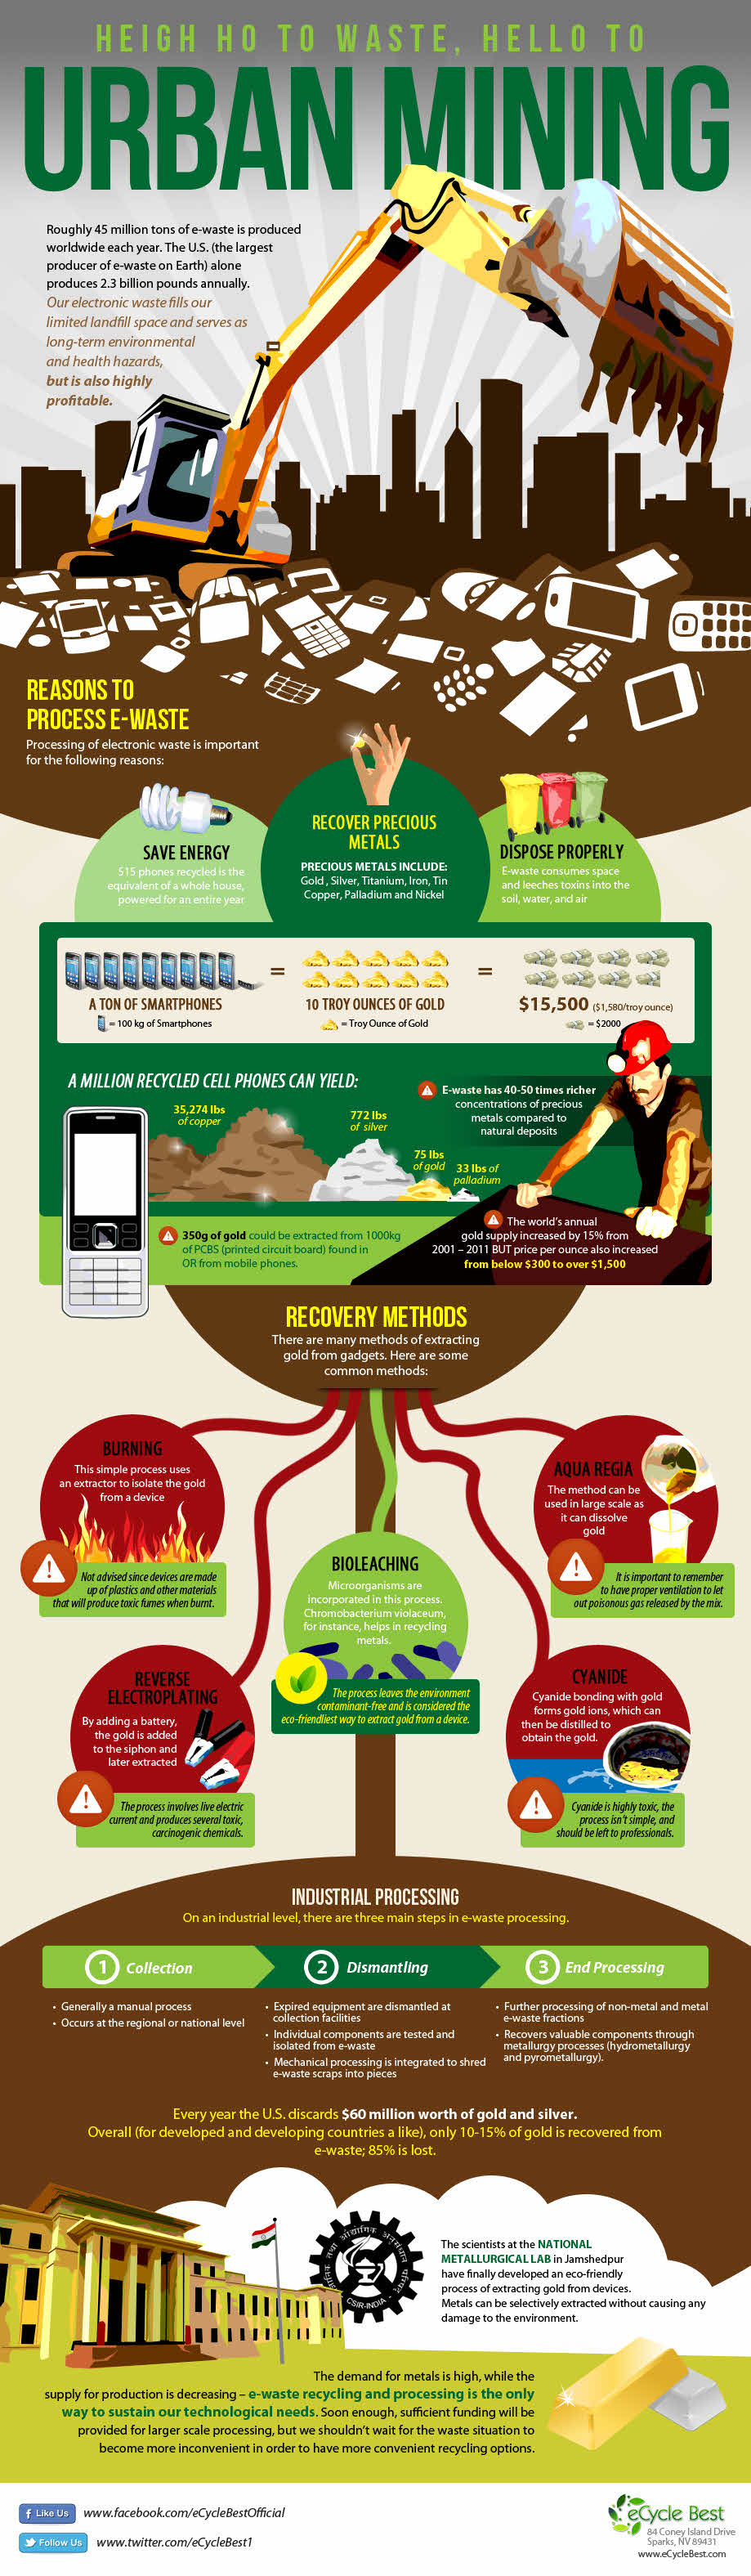 urban mining infographic